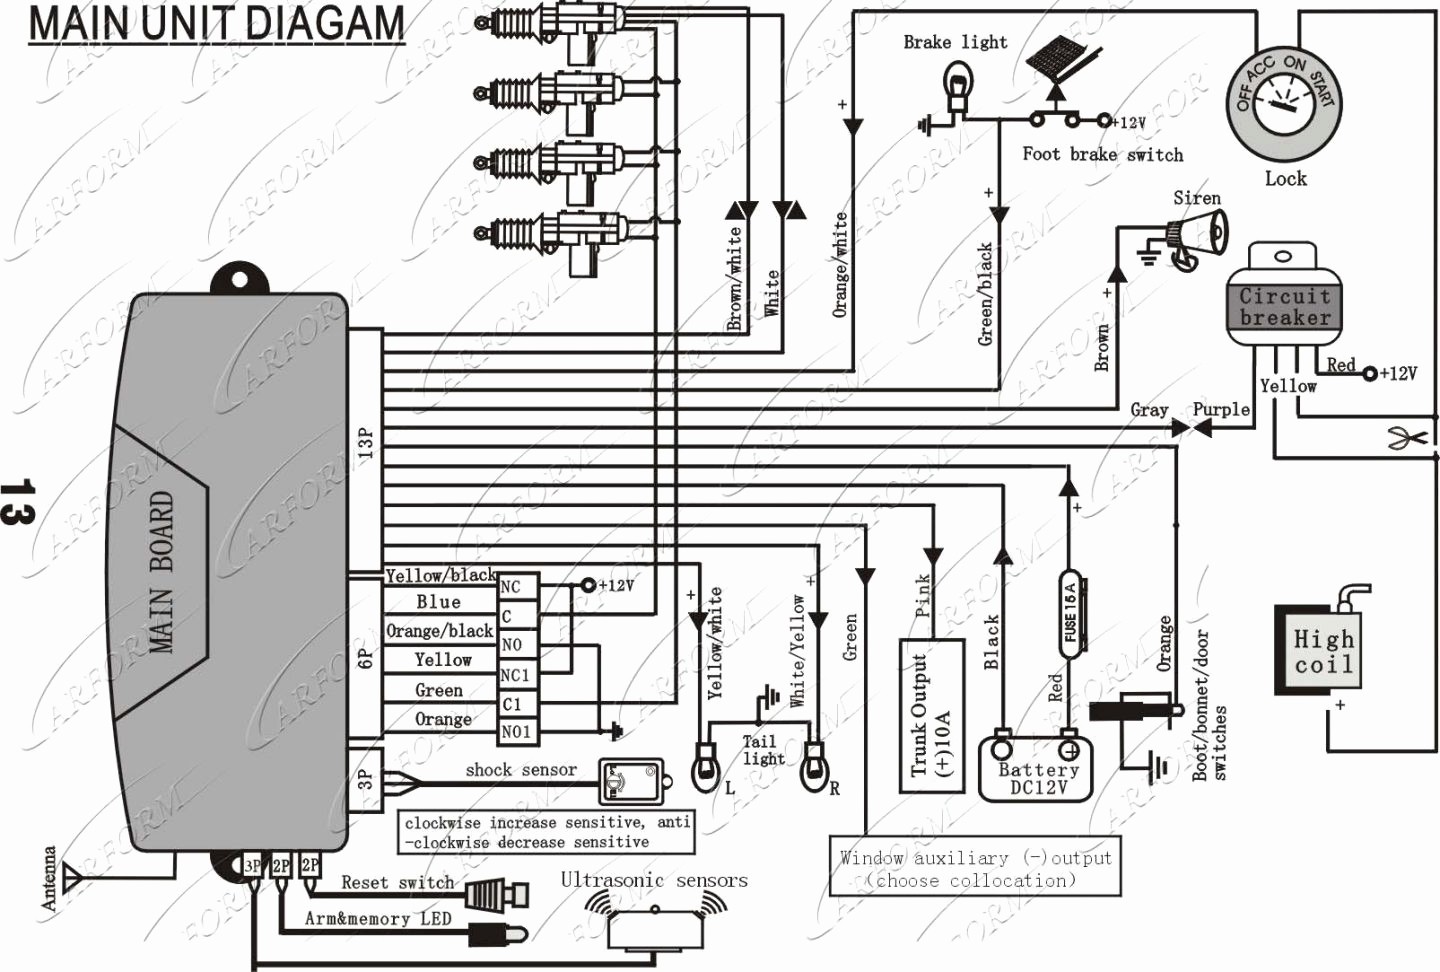 Viper 160xv Wiring Diagram Ls3 Alternator Wiring 1996 Chevy Cavalier